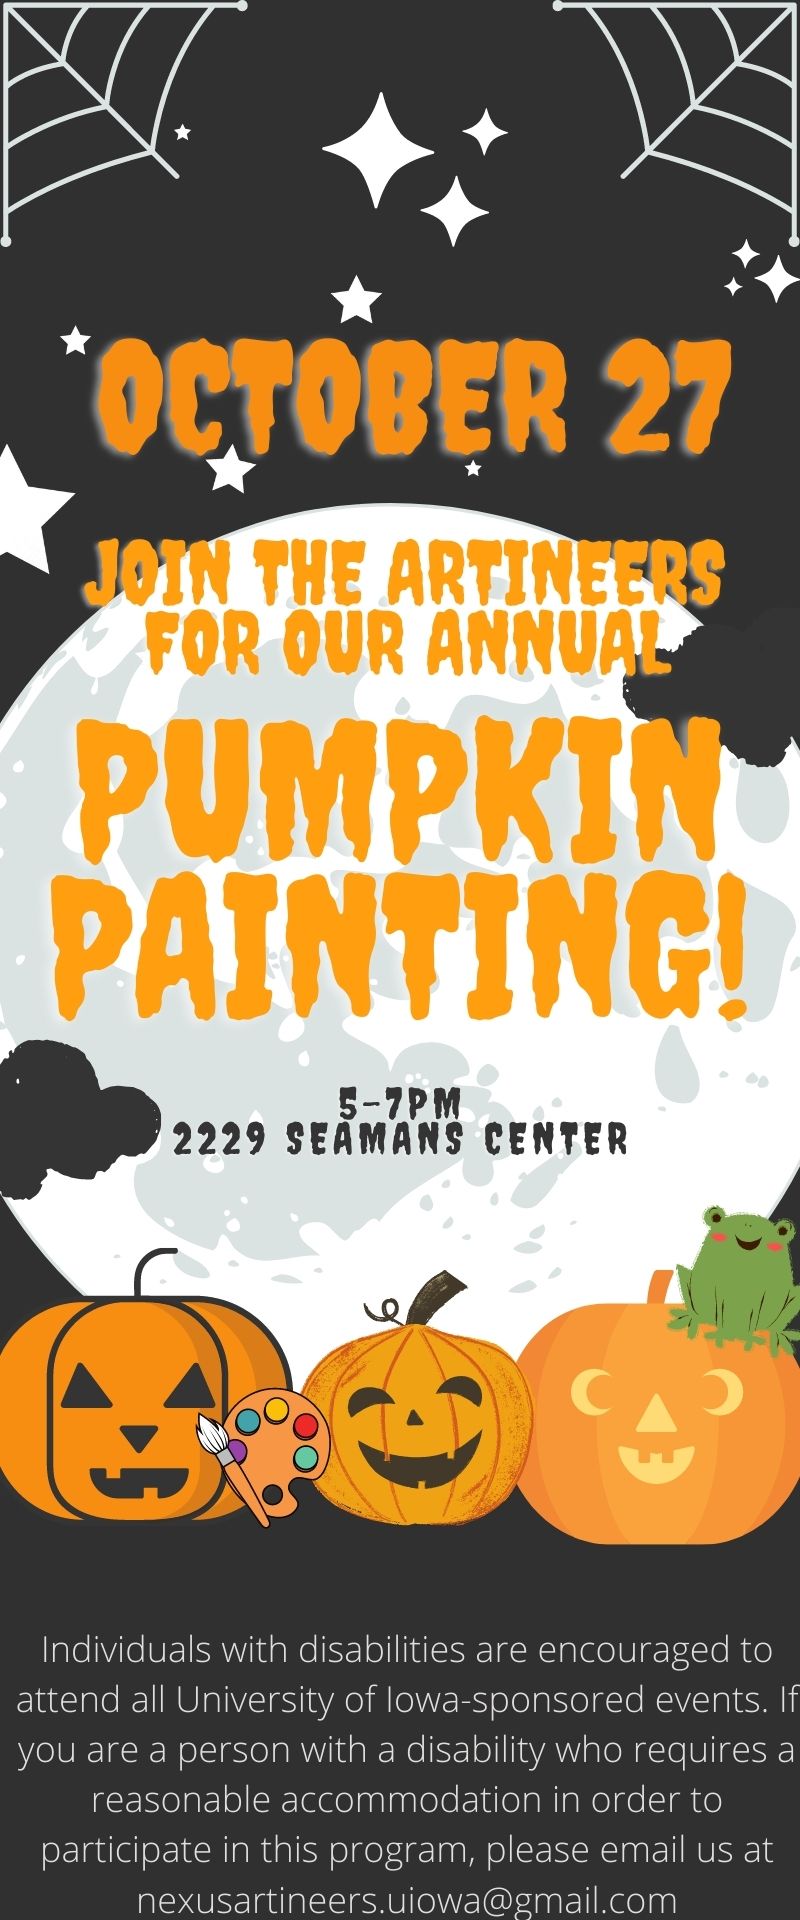 Pumpkin Painting - October 27th